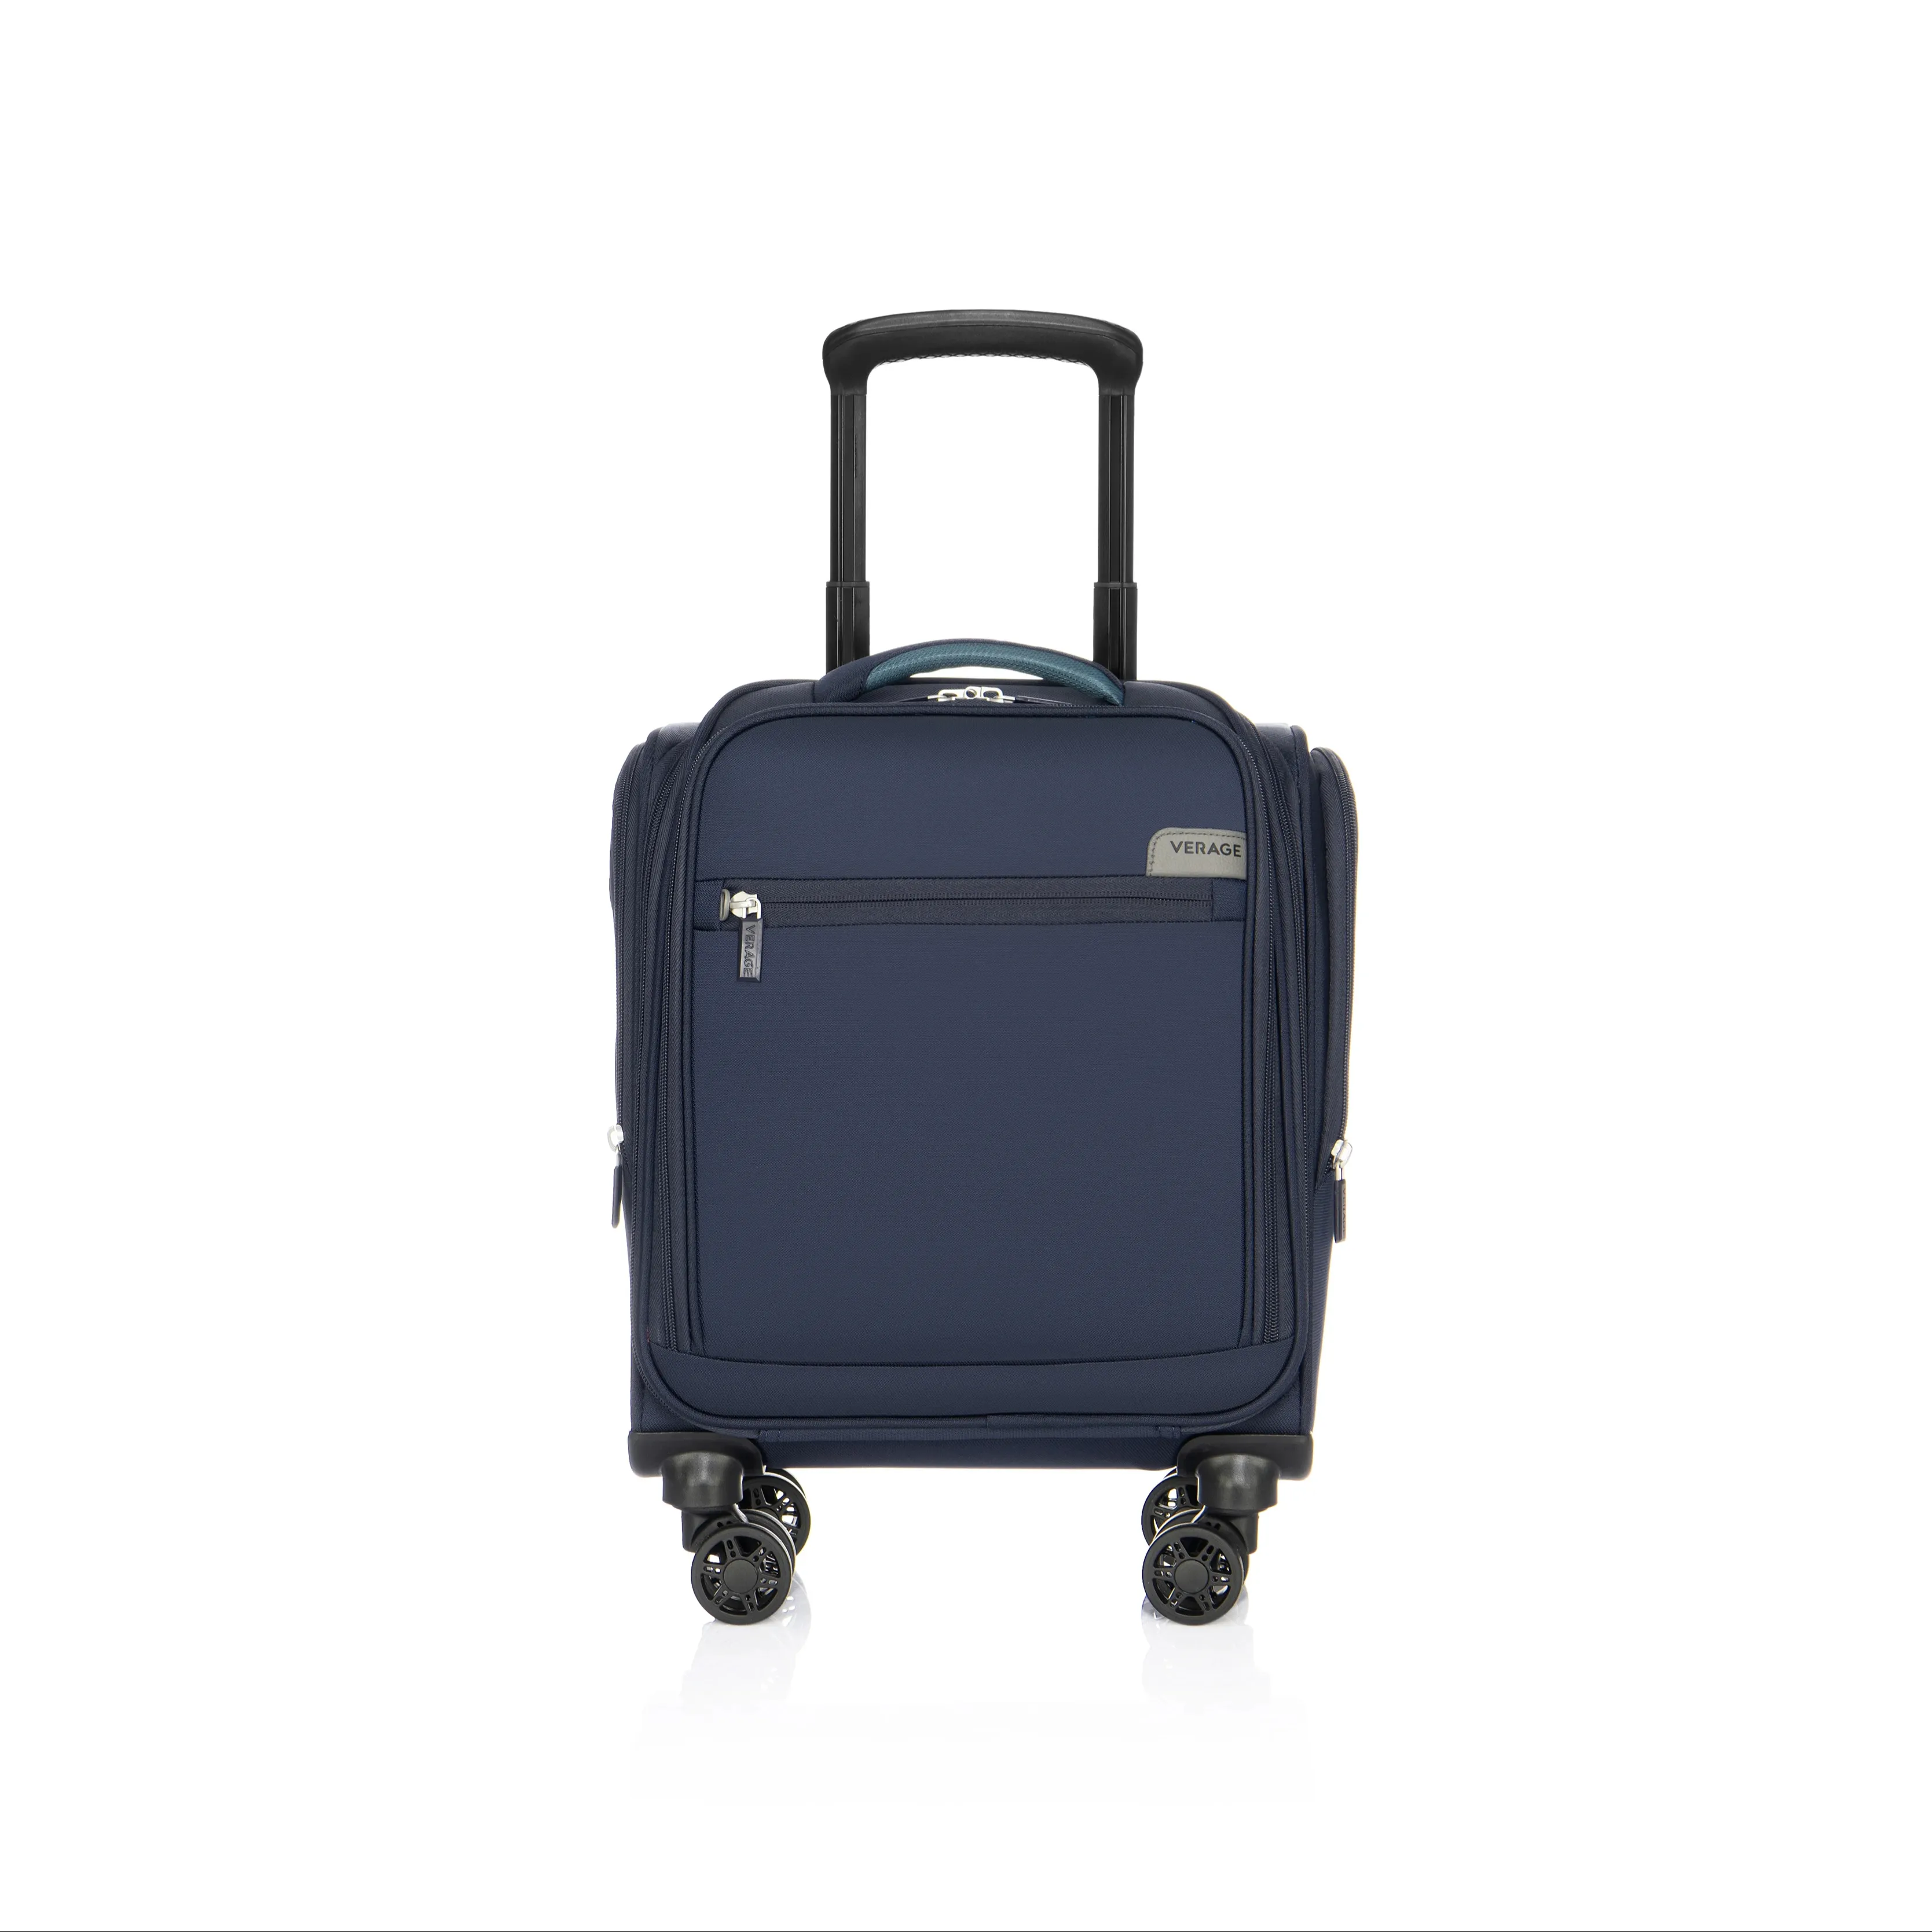 VERAGE Airlines軽量スーツケースホイール付きスピナーバッグキャリーオンラゲッジアンダーシートスーツケース、ホイールとUSBポート付き